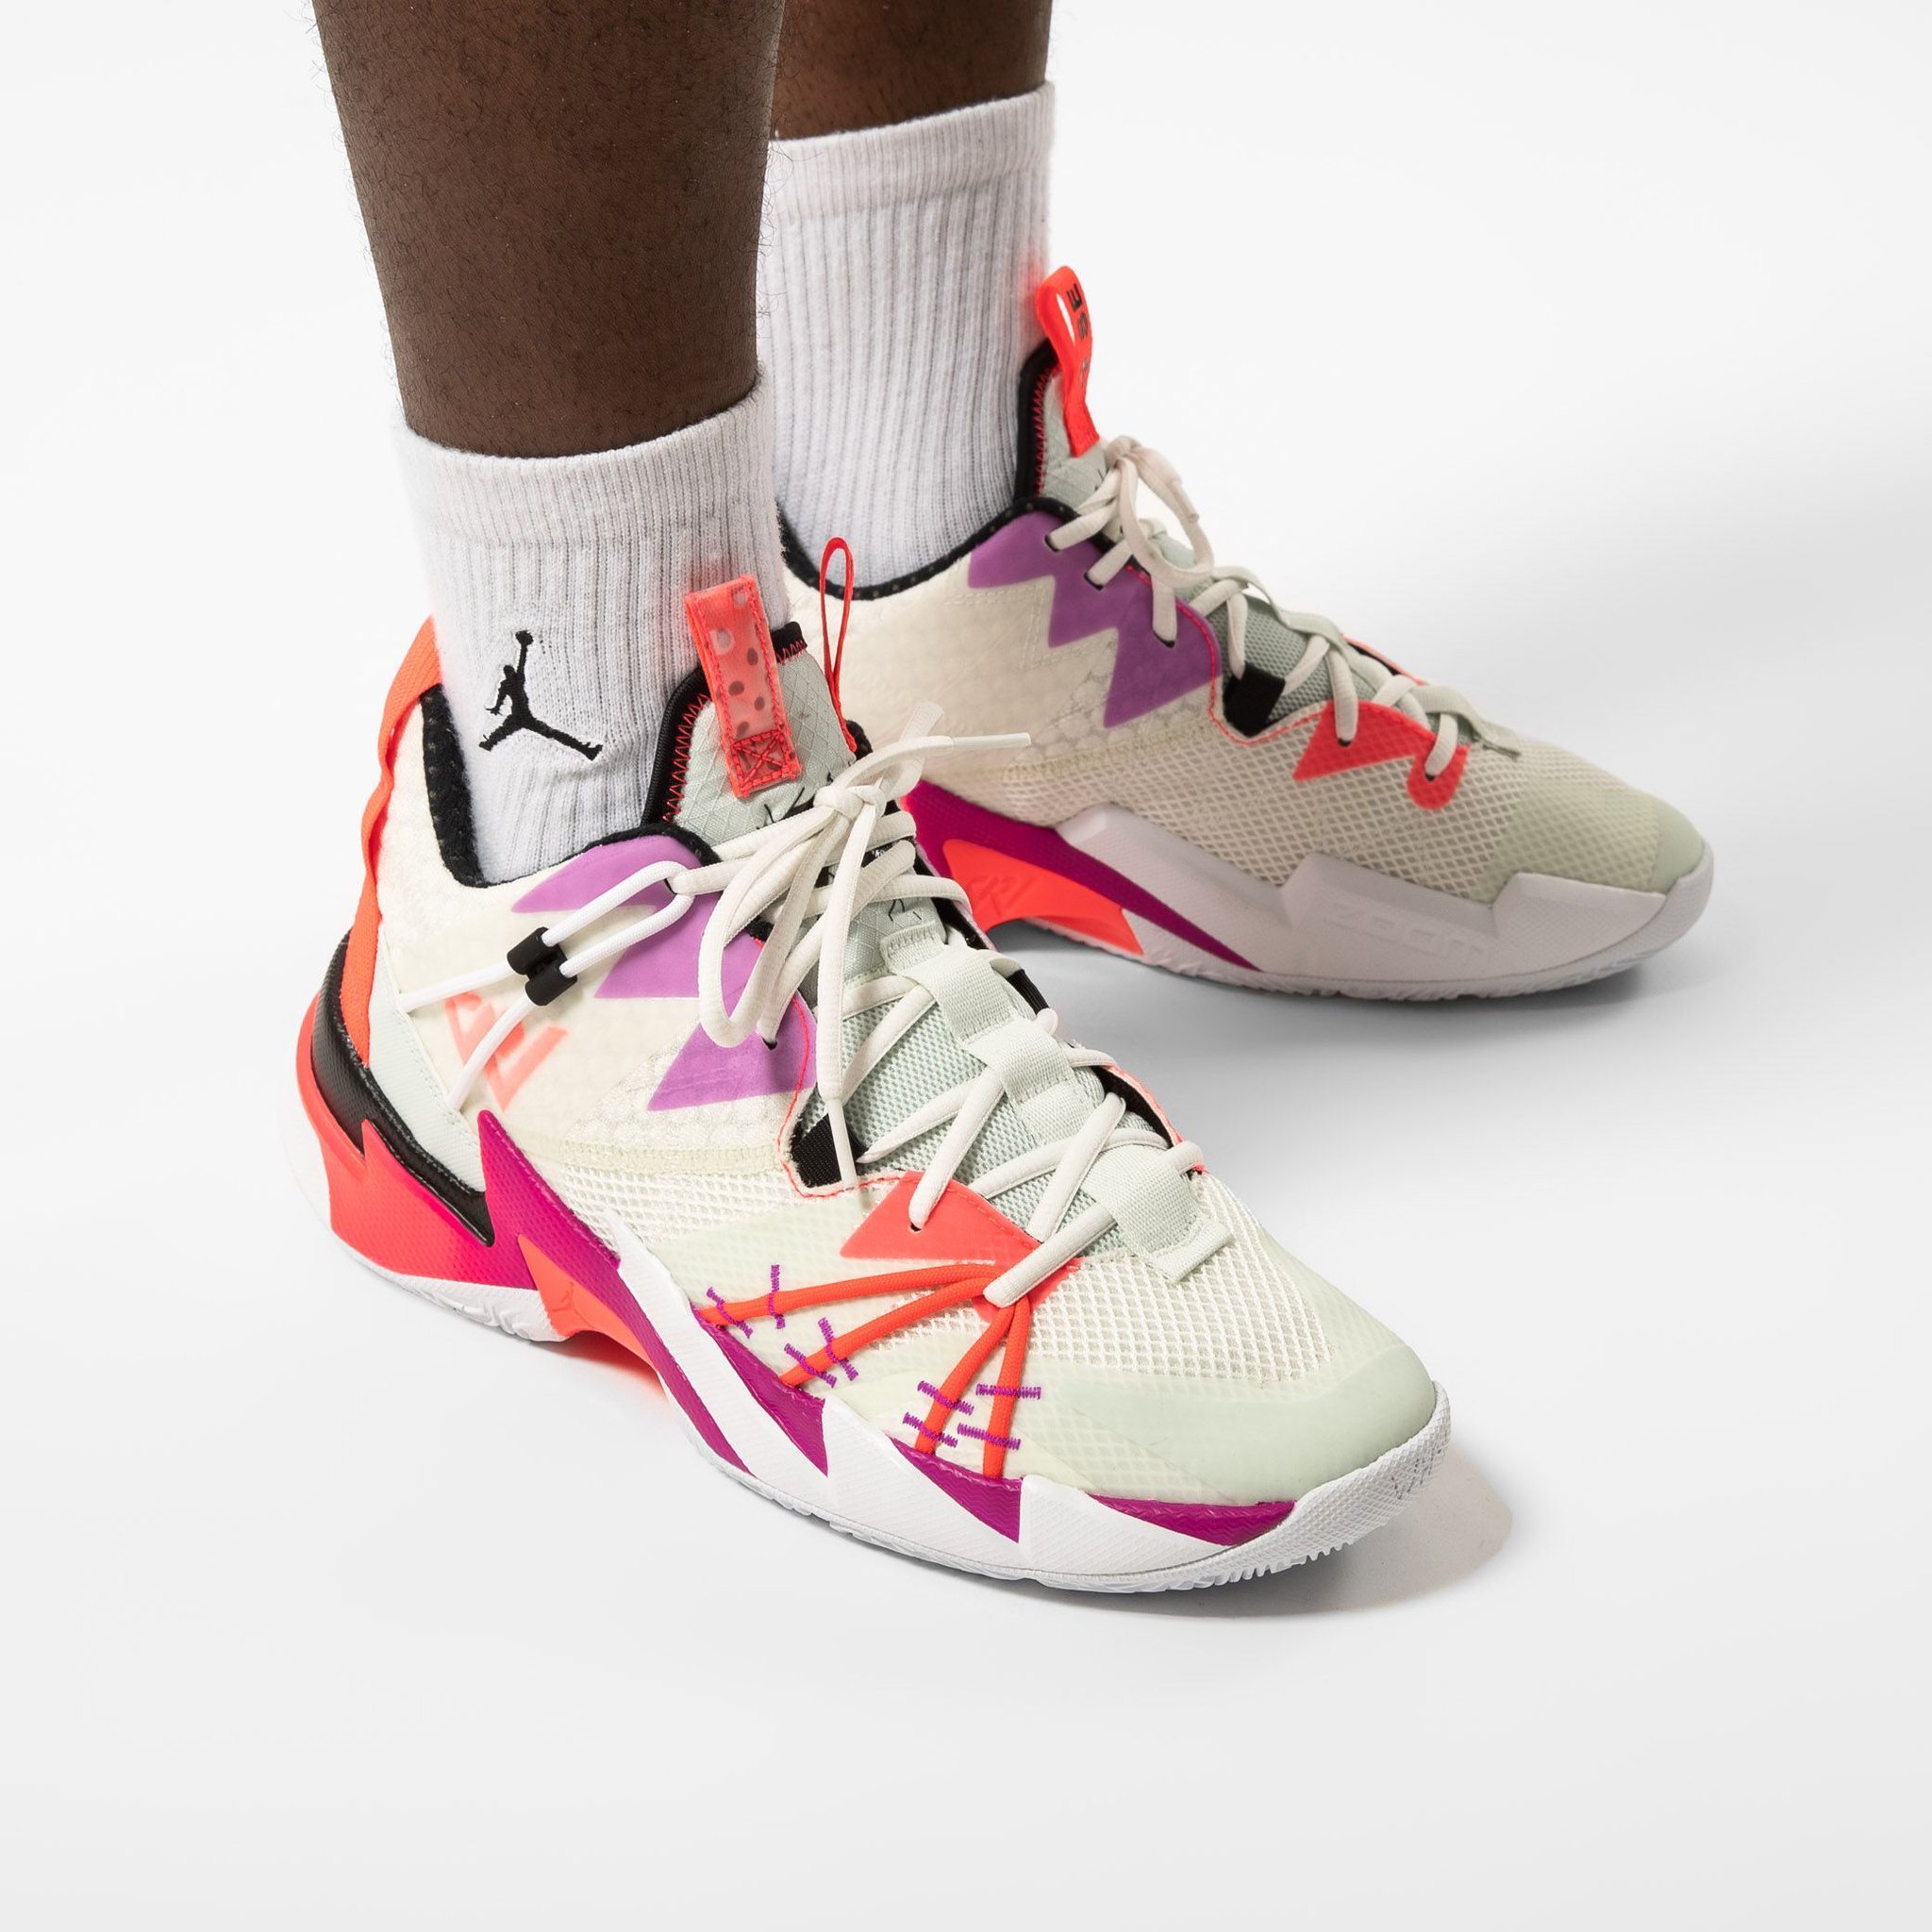 Nike Jordan Why Not Zero.3 SE Russell Westbrook Shoes CK6611 101 Men's Size  10